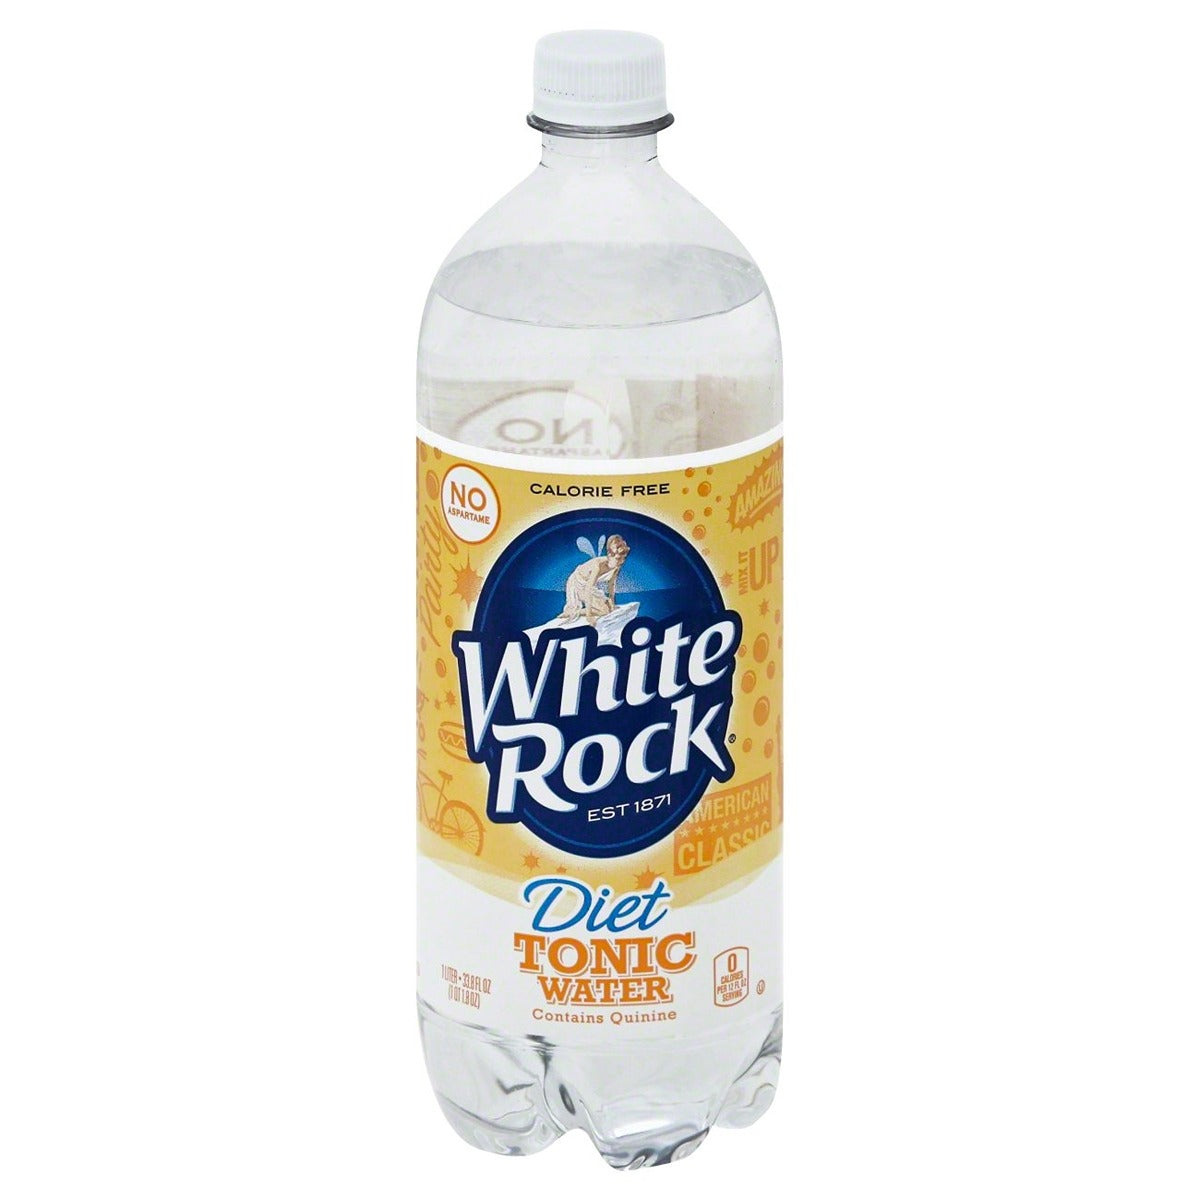 WHITE ROCK DIET TONIC